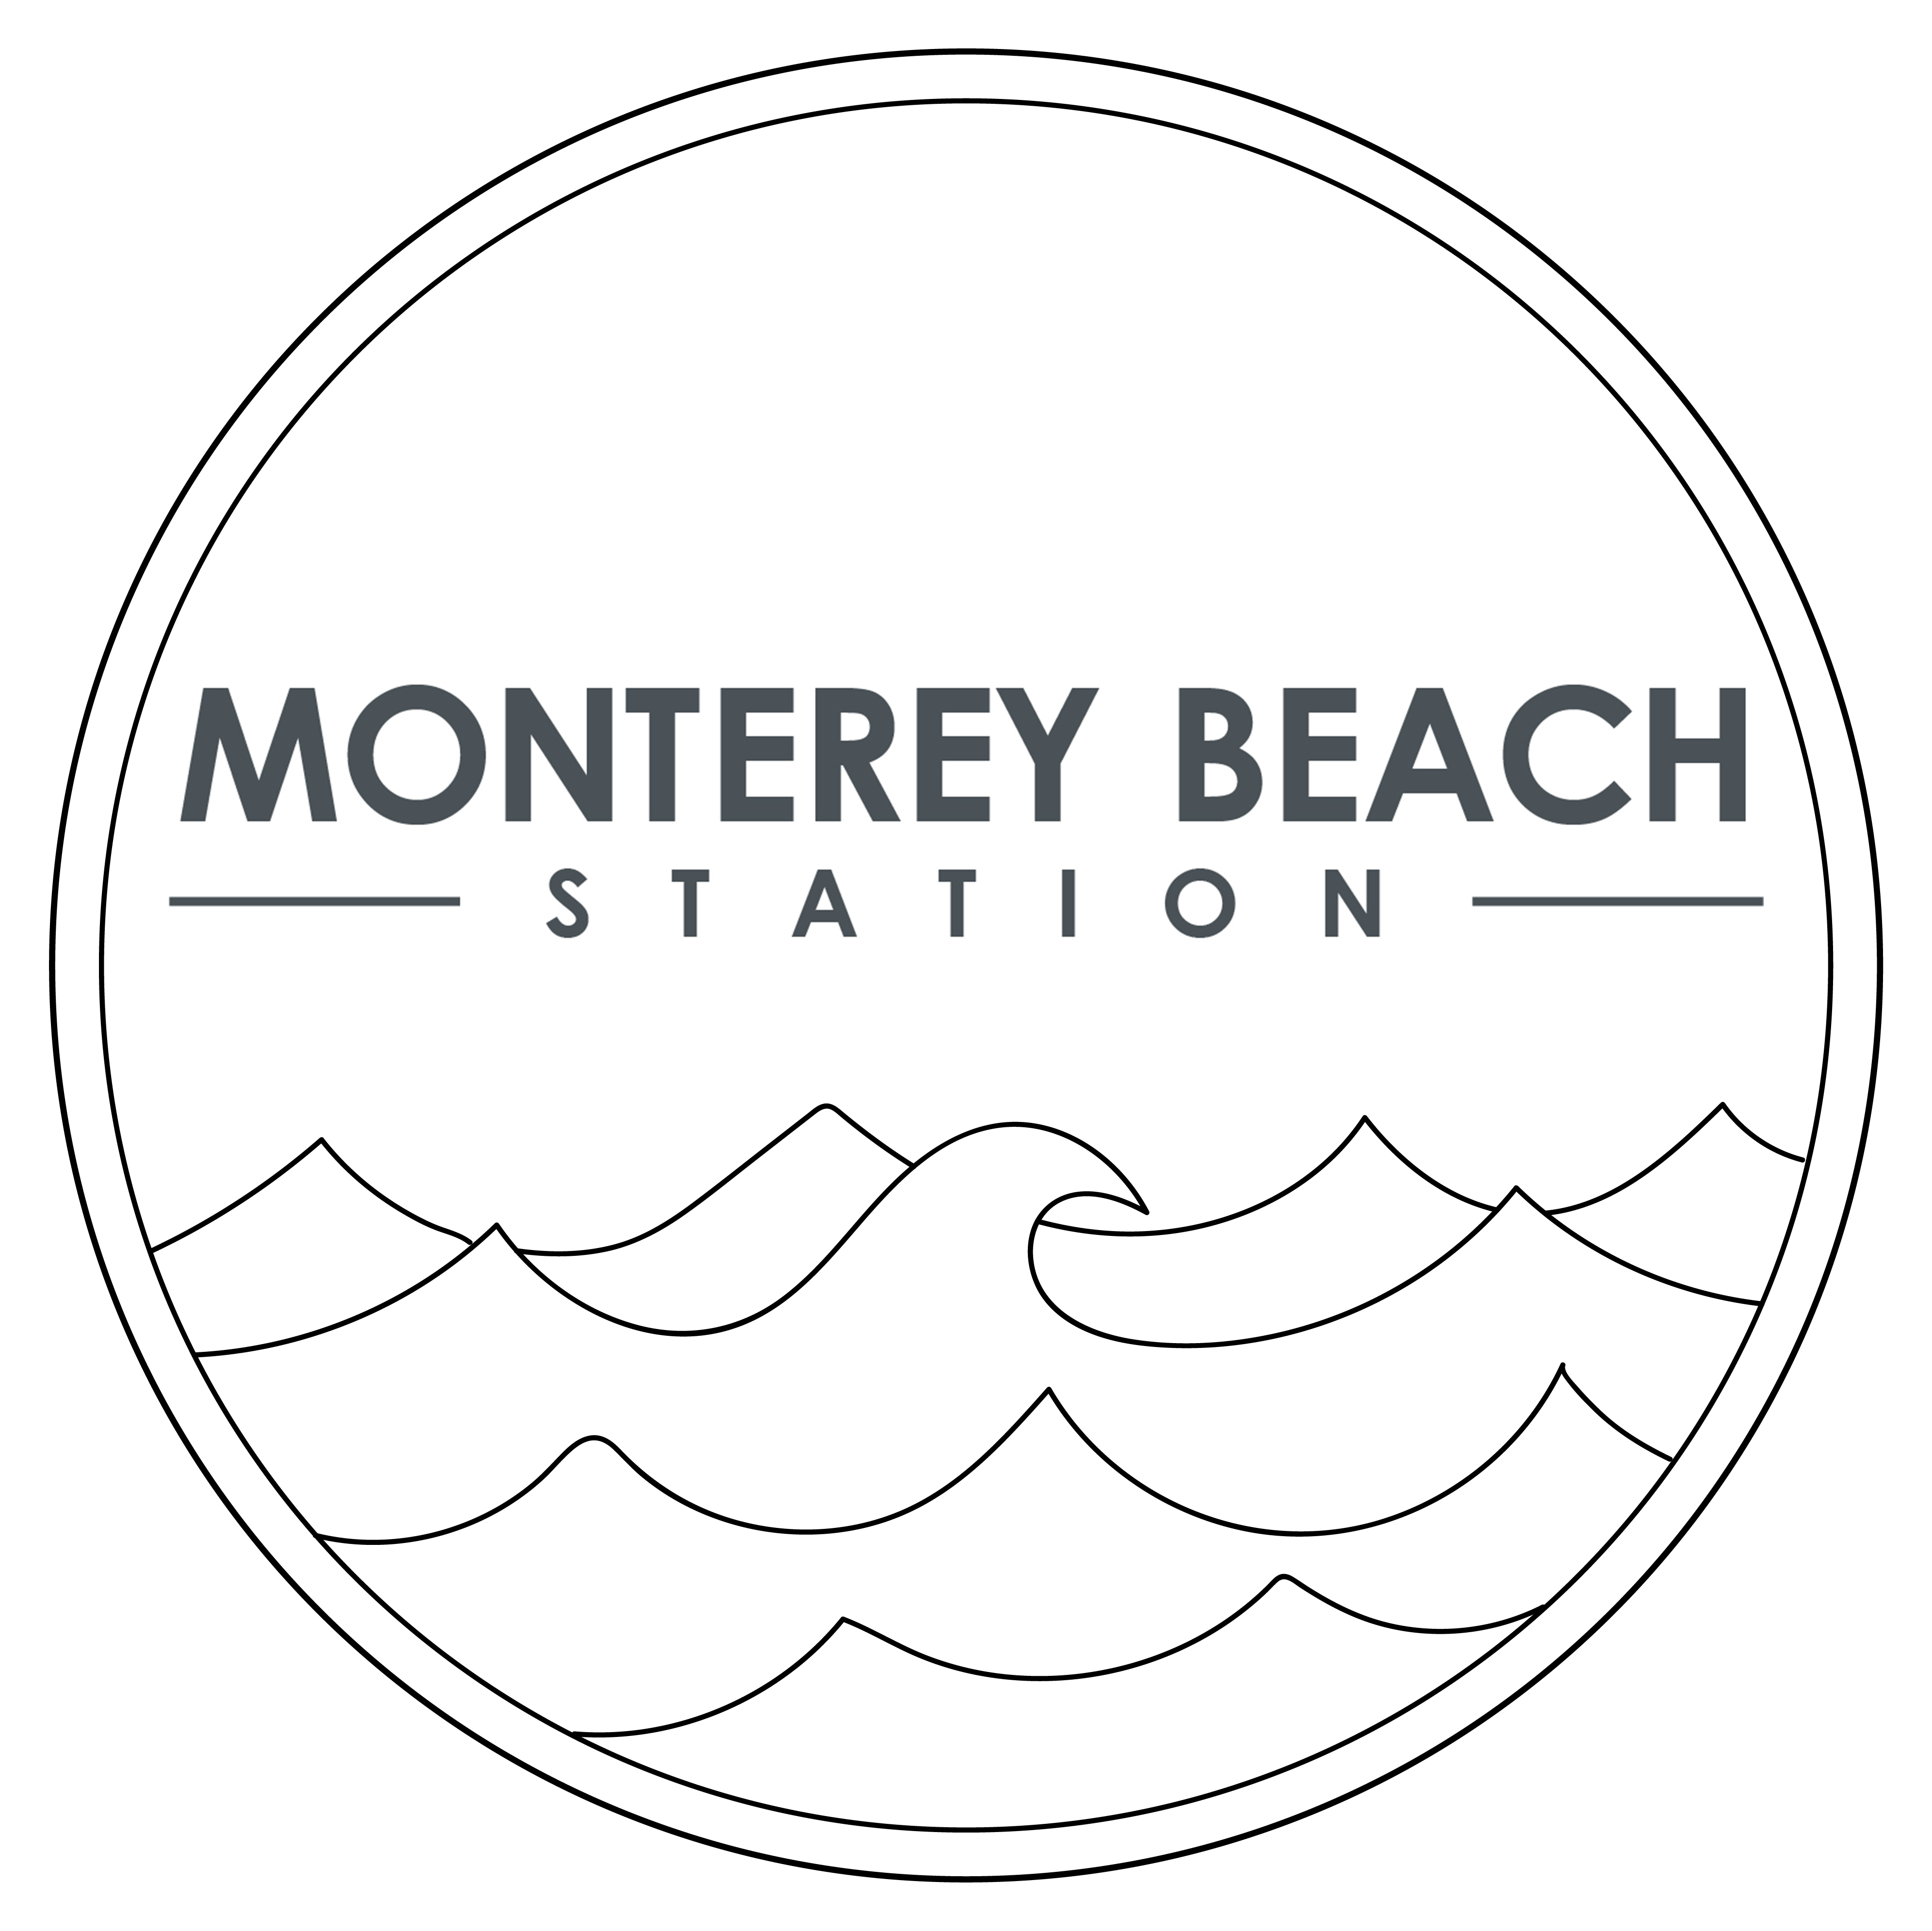 MONTEREY BEACH STATION Logo